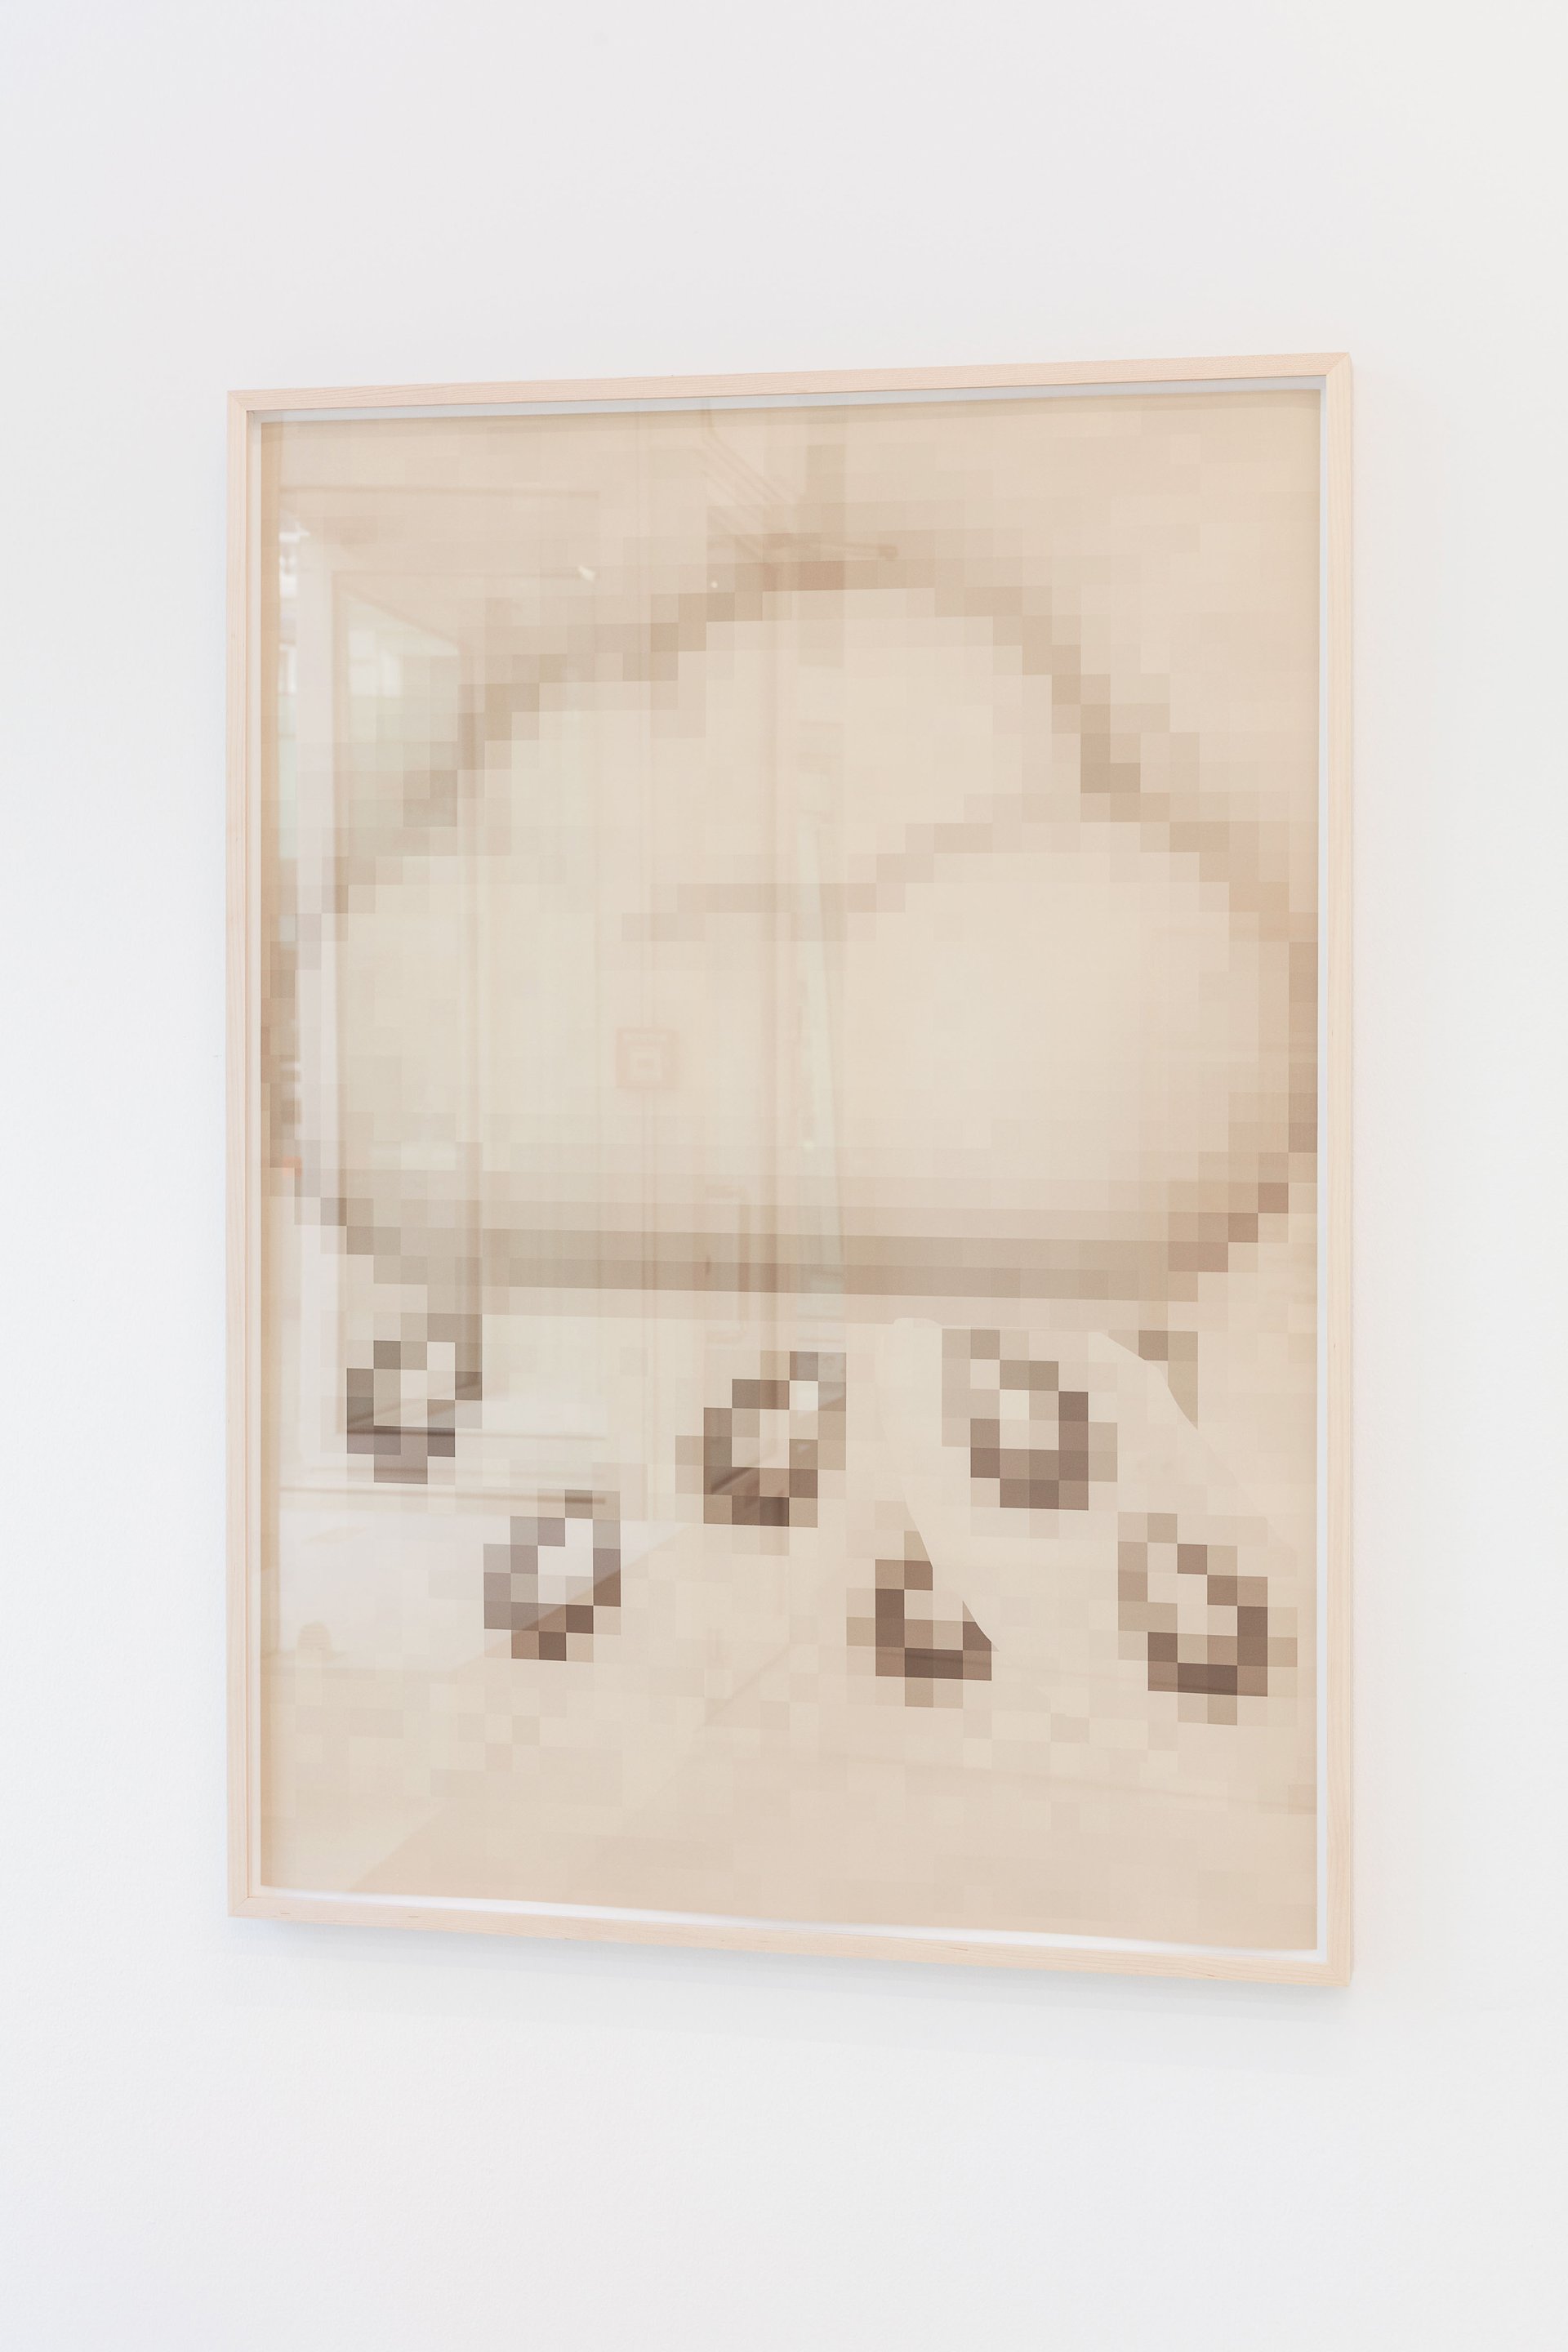 Lisa HolzerRain (beige/brown), 2021Pigment print on cotton paper, black marker on wood110.3 × 80.2 cm